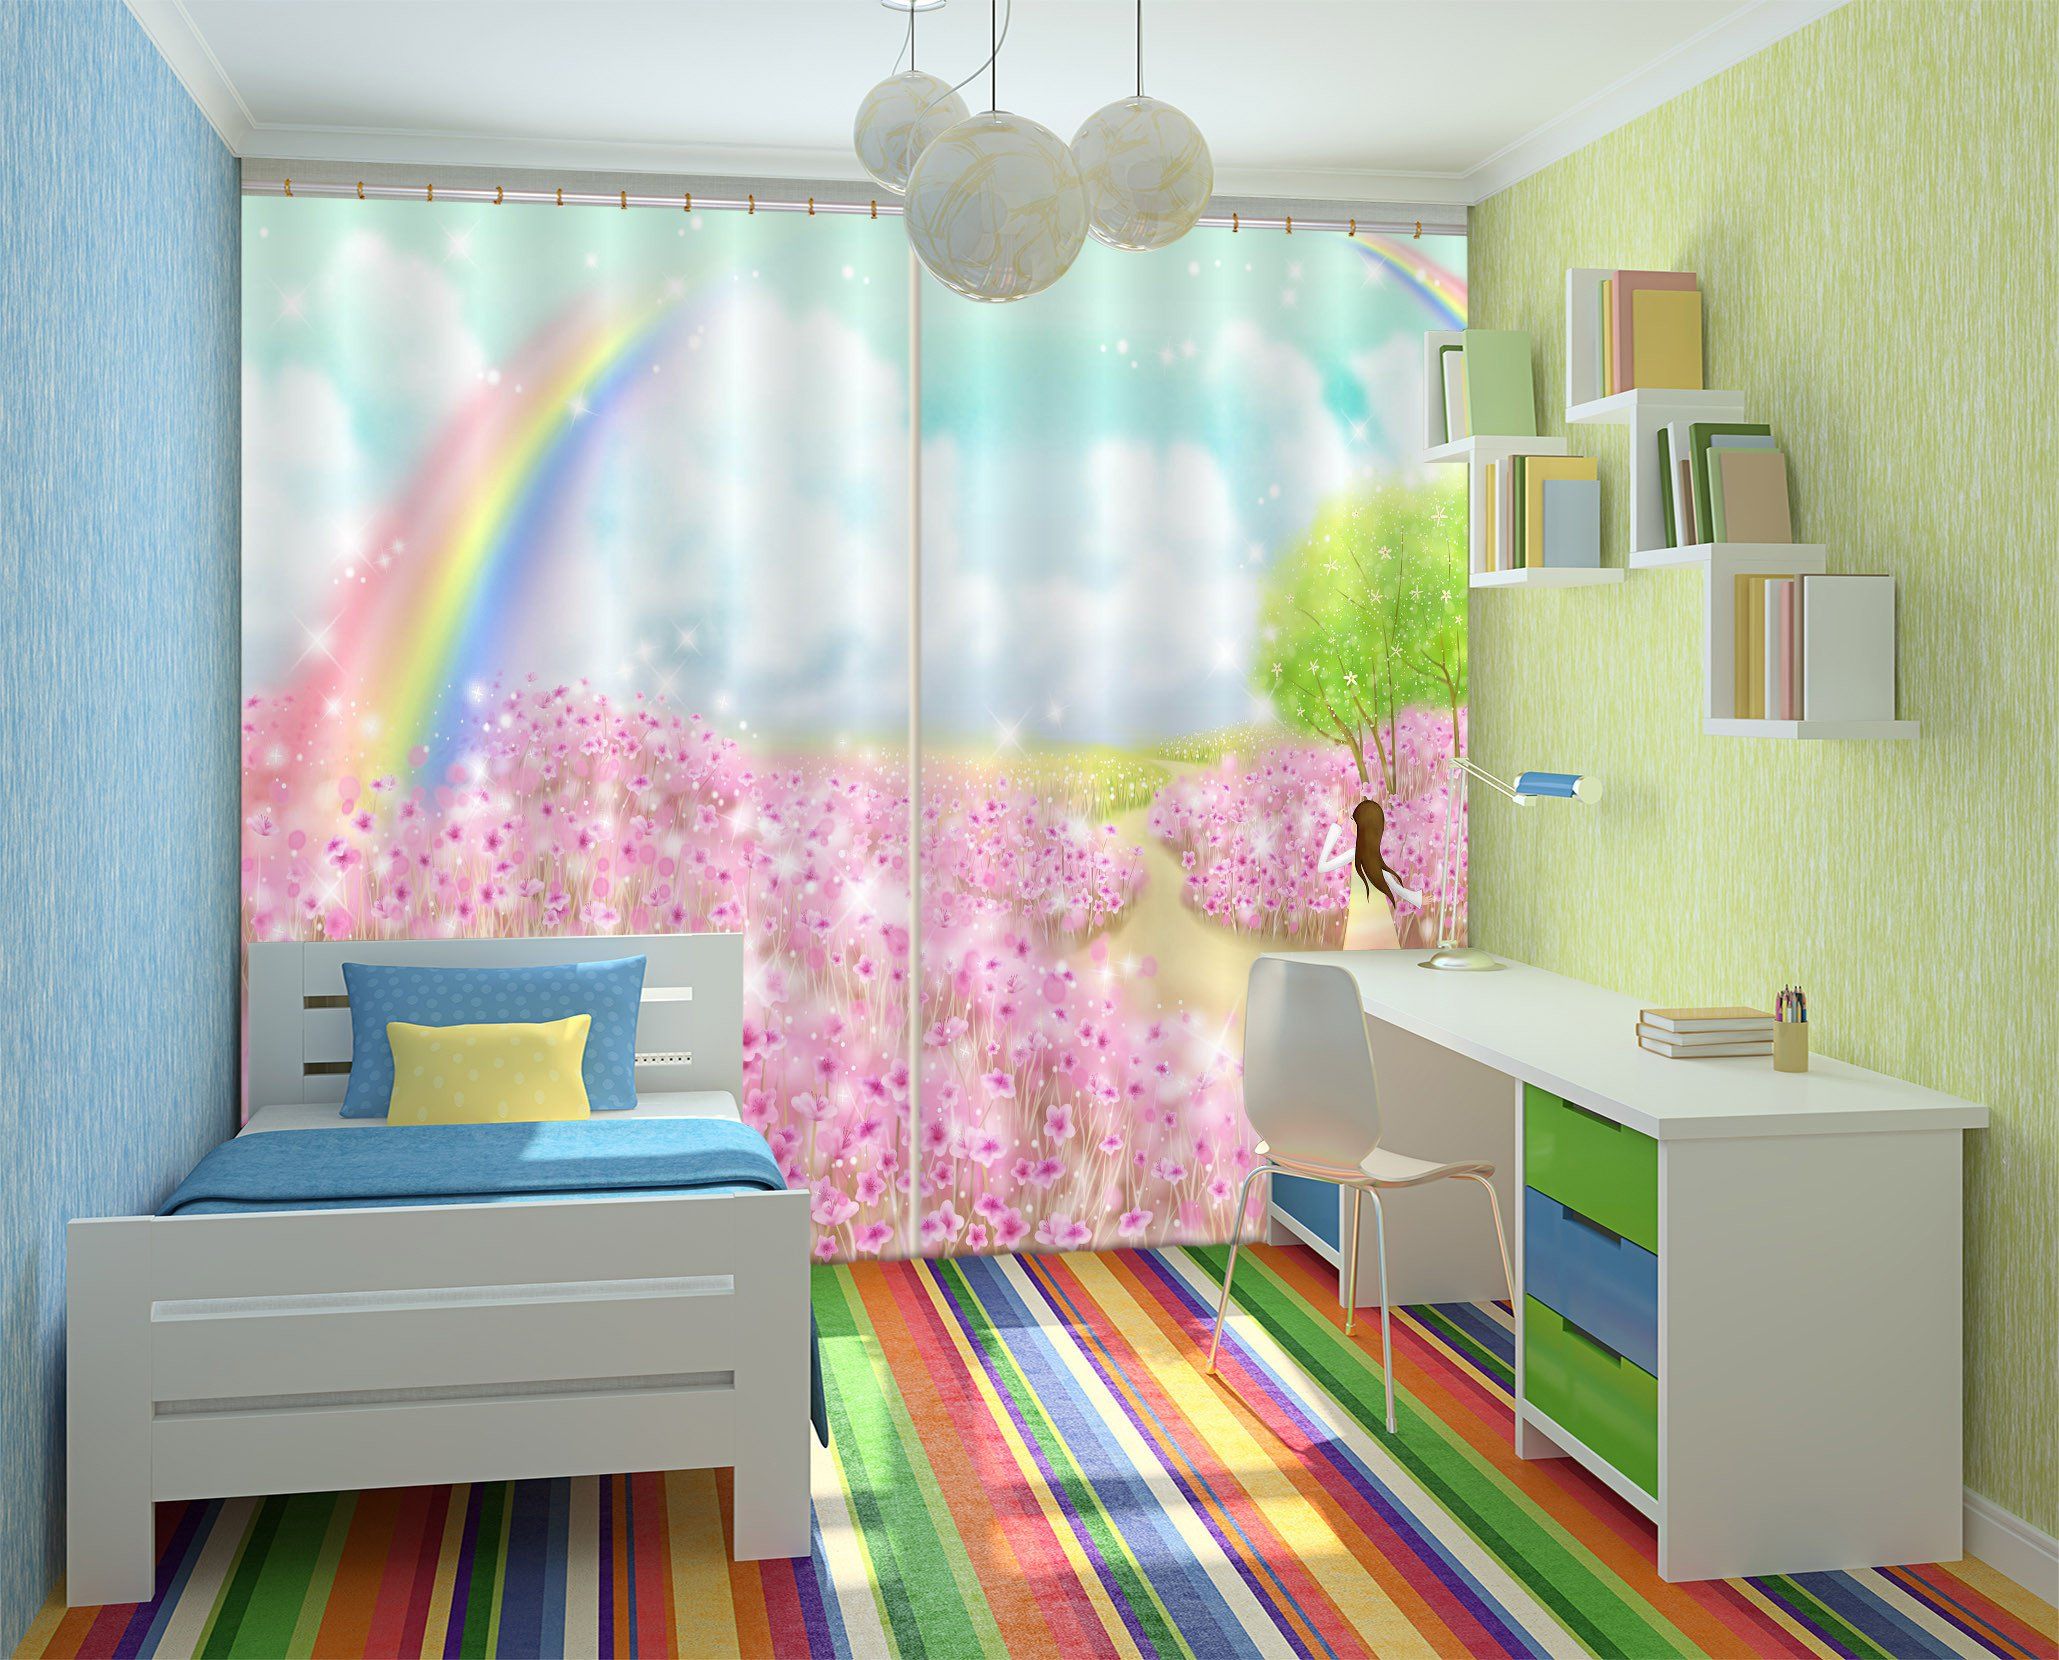 3D Flowers Field Rainbow 792 Curtains Drapes Wallpaper AJ Wallpaper 